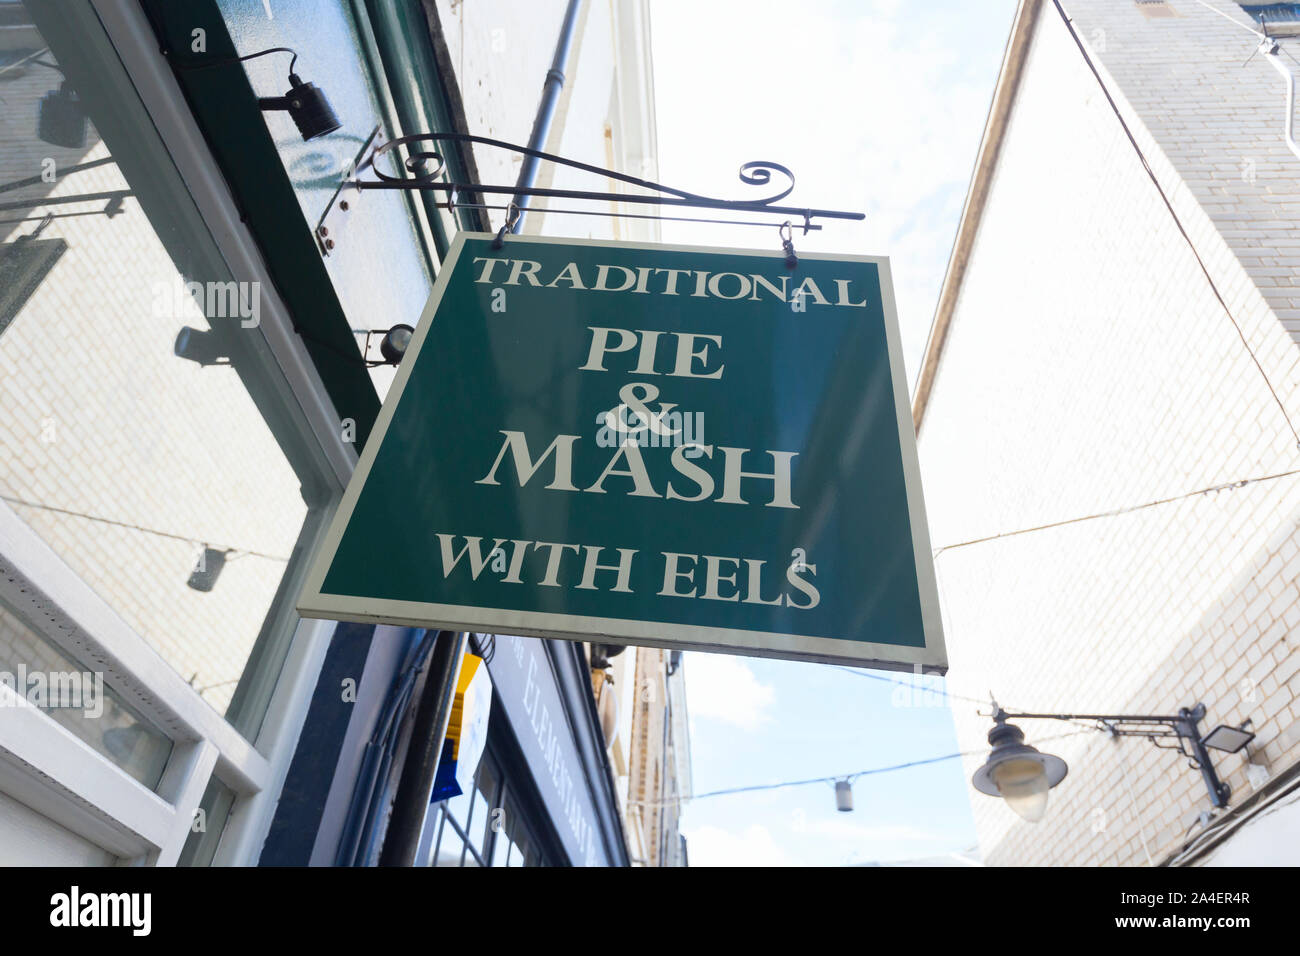 Pie & mash traditionnel restaurant sign logo, Londres, Angleterre Banque D'Images